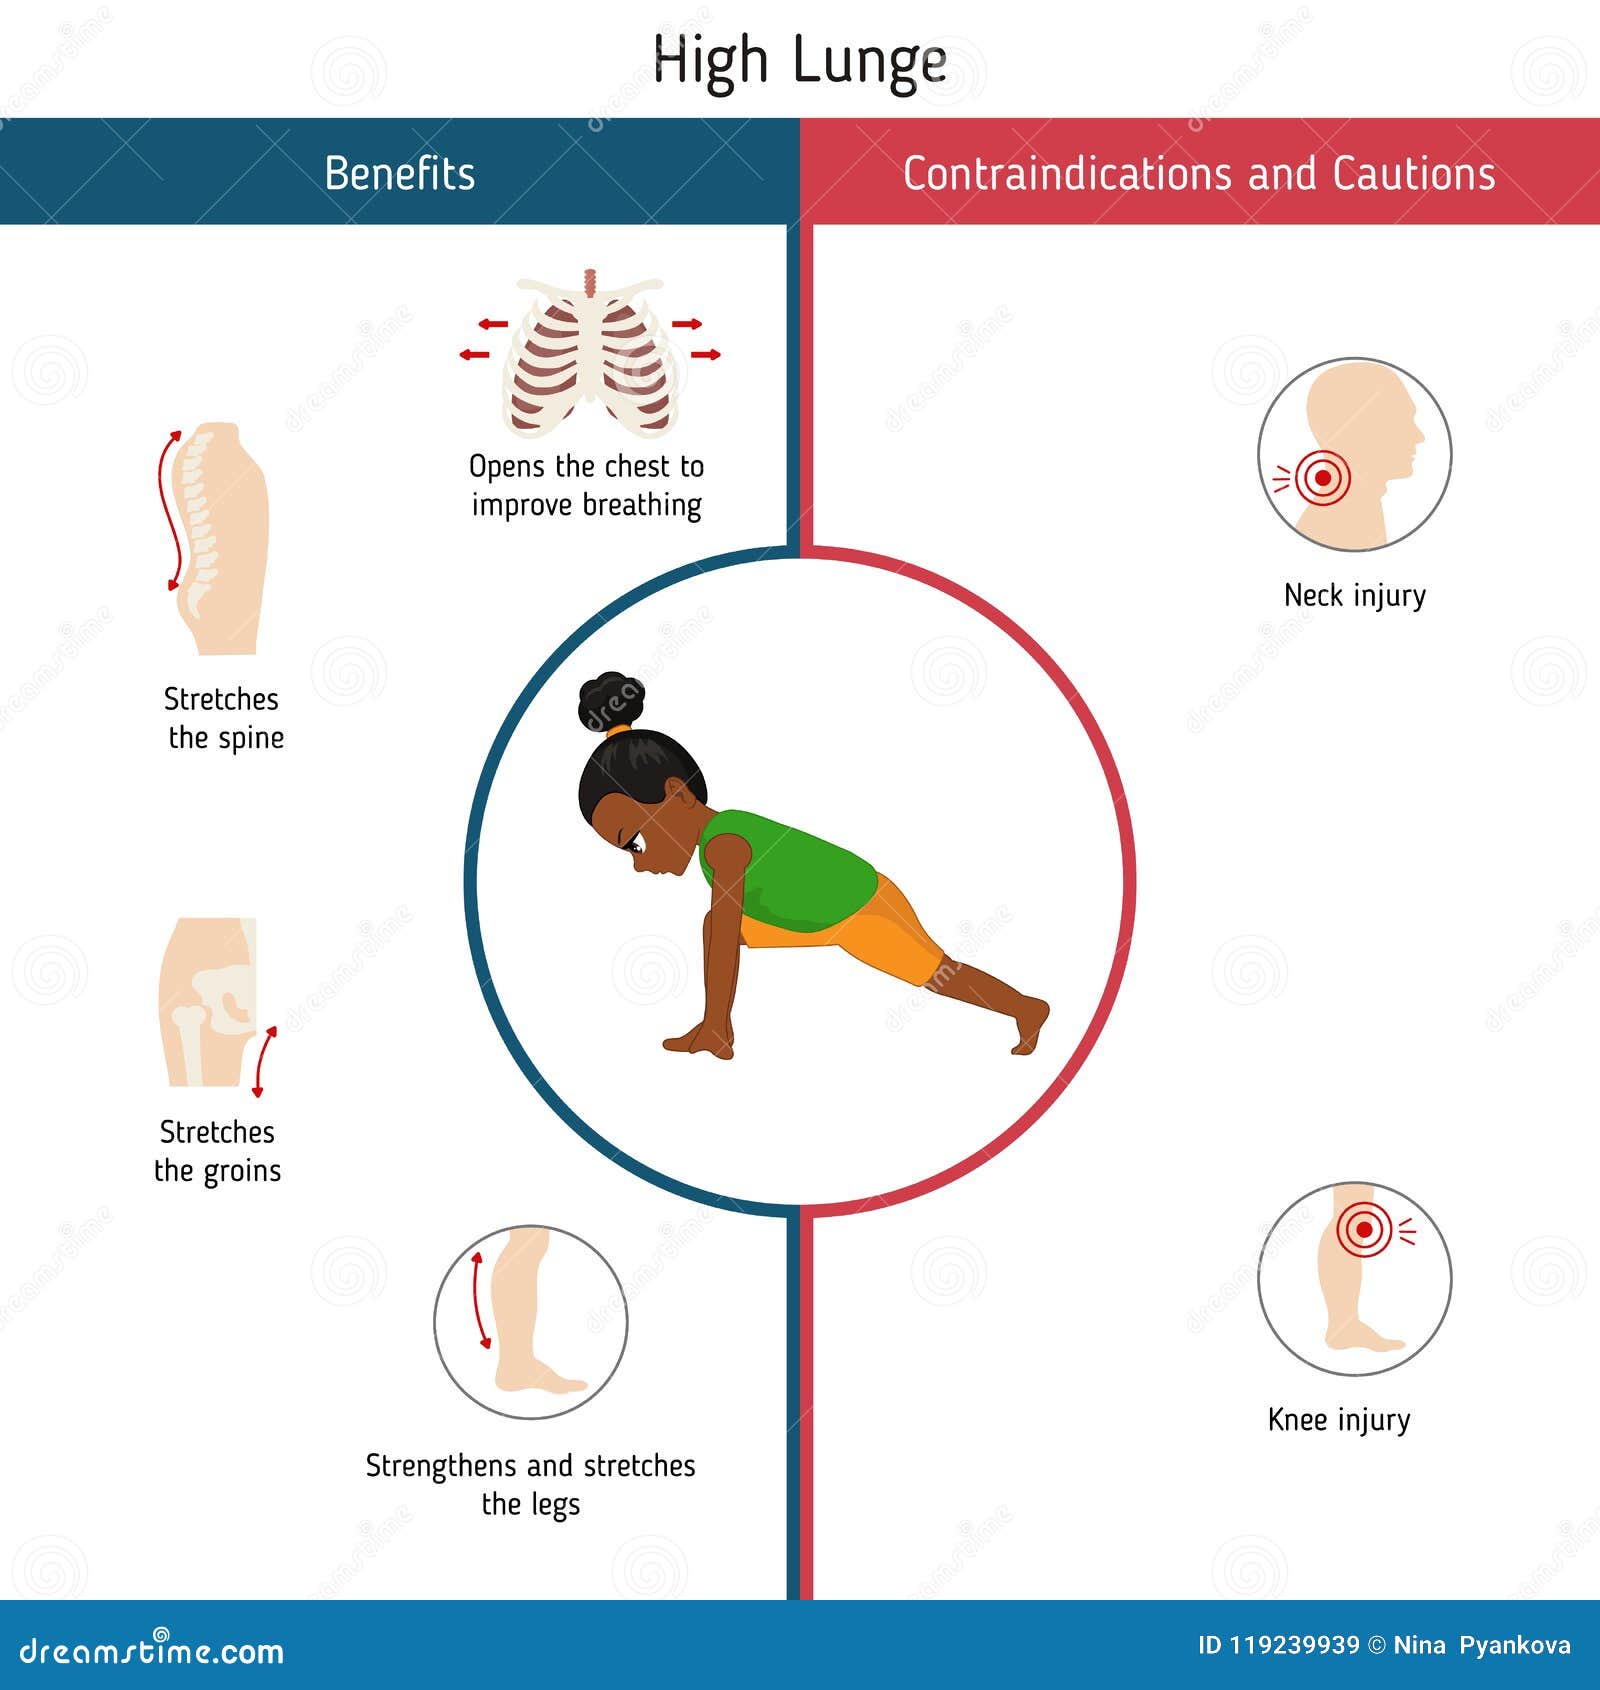 High Lunge - Yoga Poses